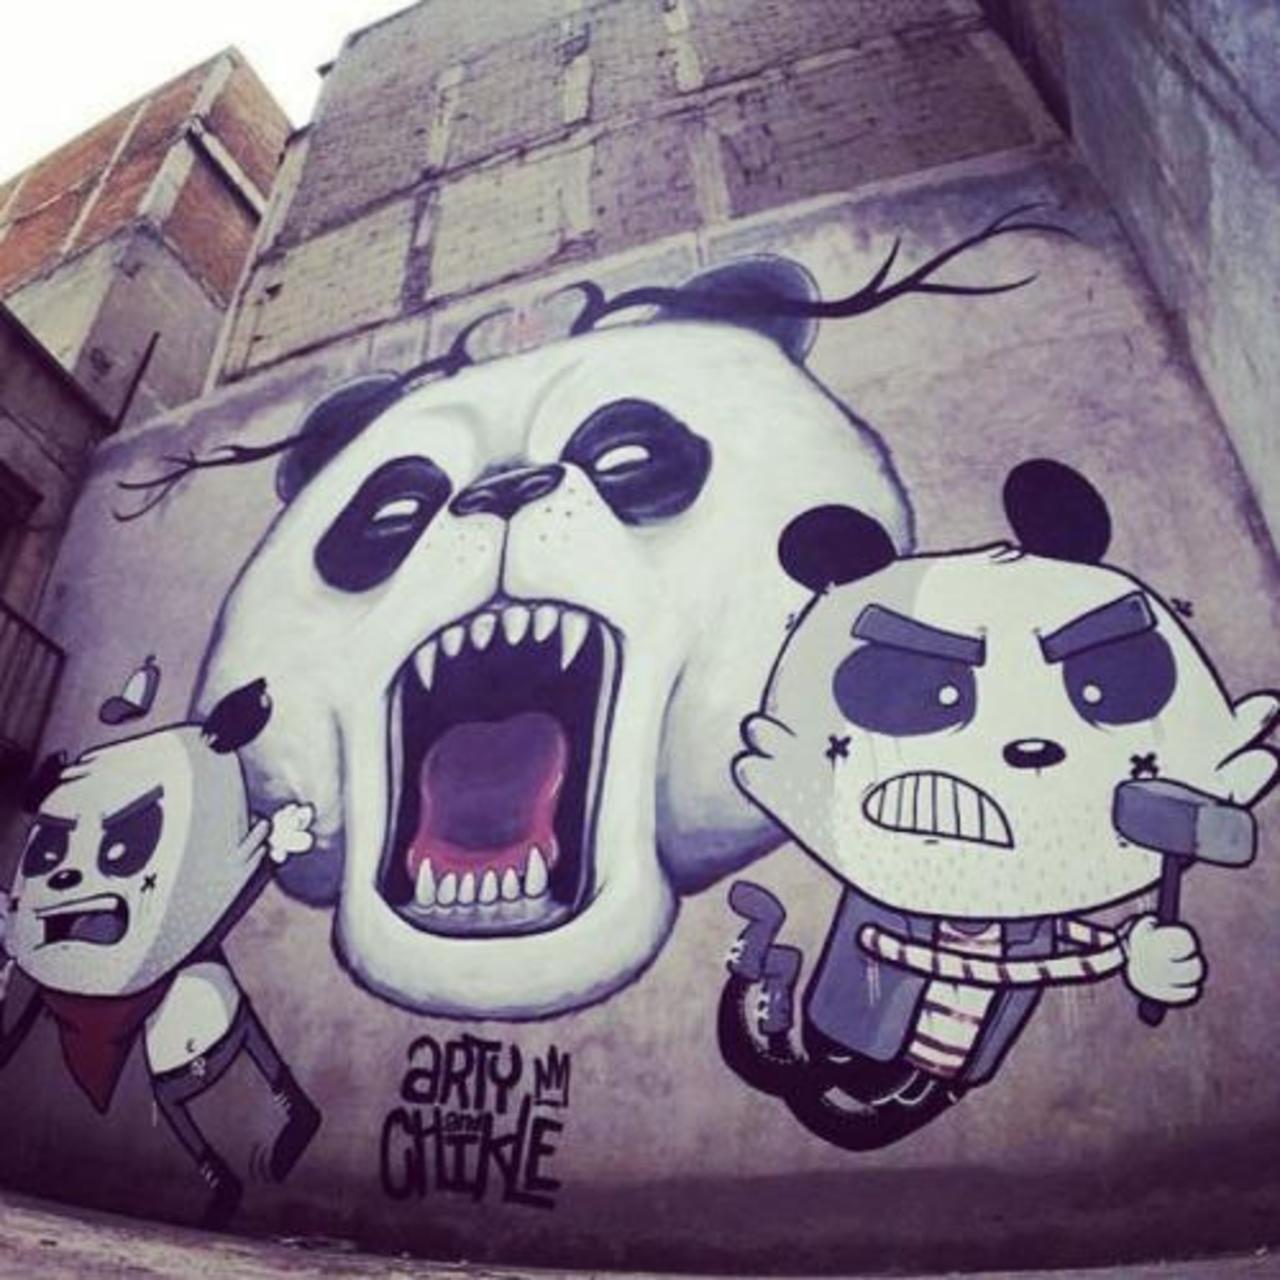 ##Sprayart ##Stencil ##Streetart ##Graffiti ... - #Mural - #ZangArt #Showcase - http://bit.ly/17GpRF7 http://t.co/sGDoGn8jXM